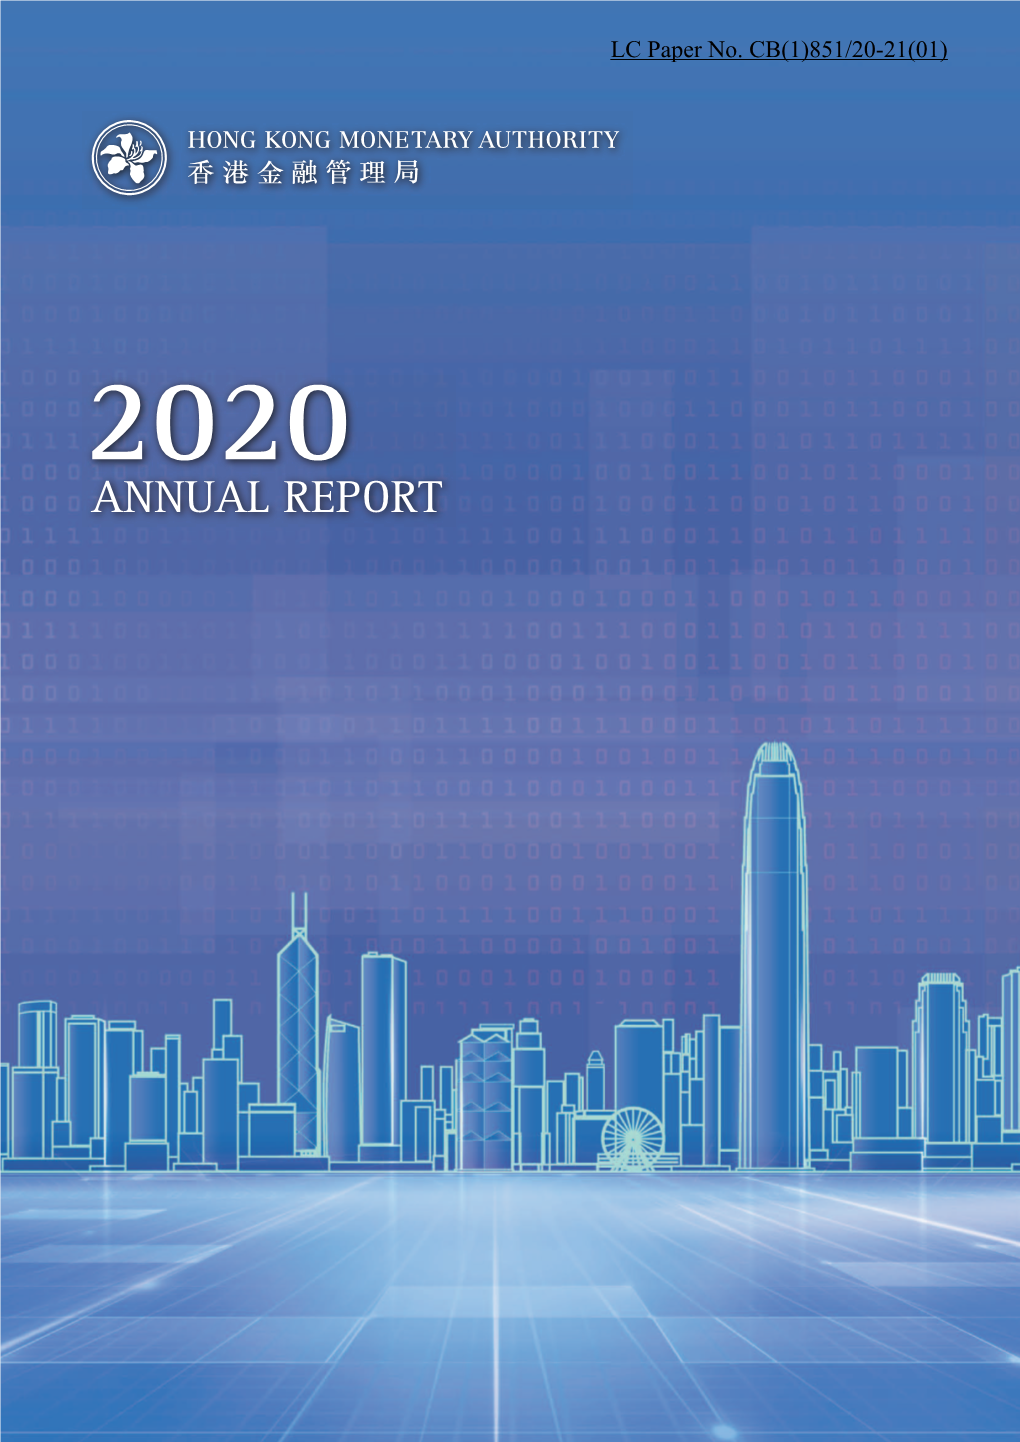 Hong Kong Monetary Authority Annual Report 2020